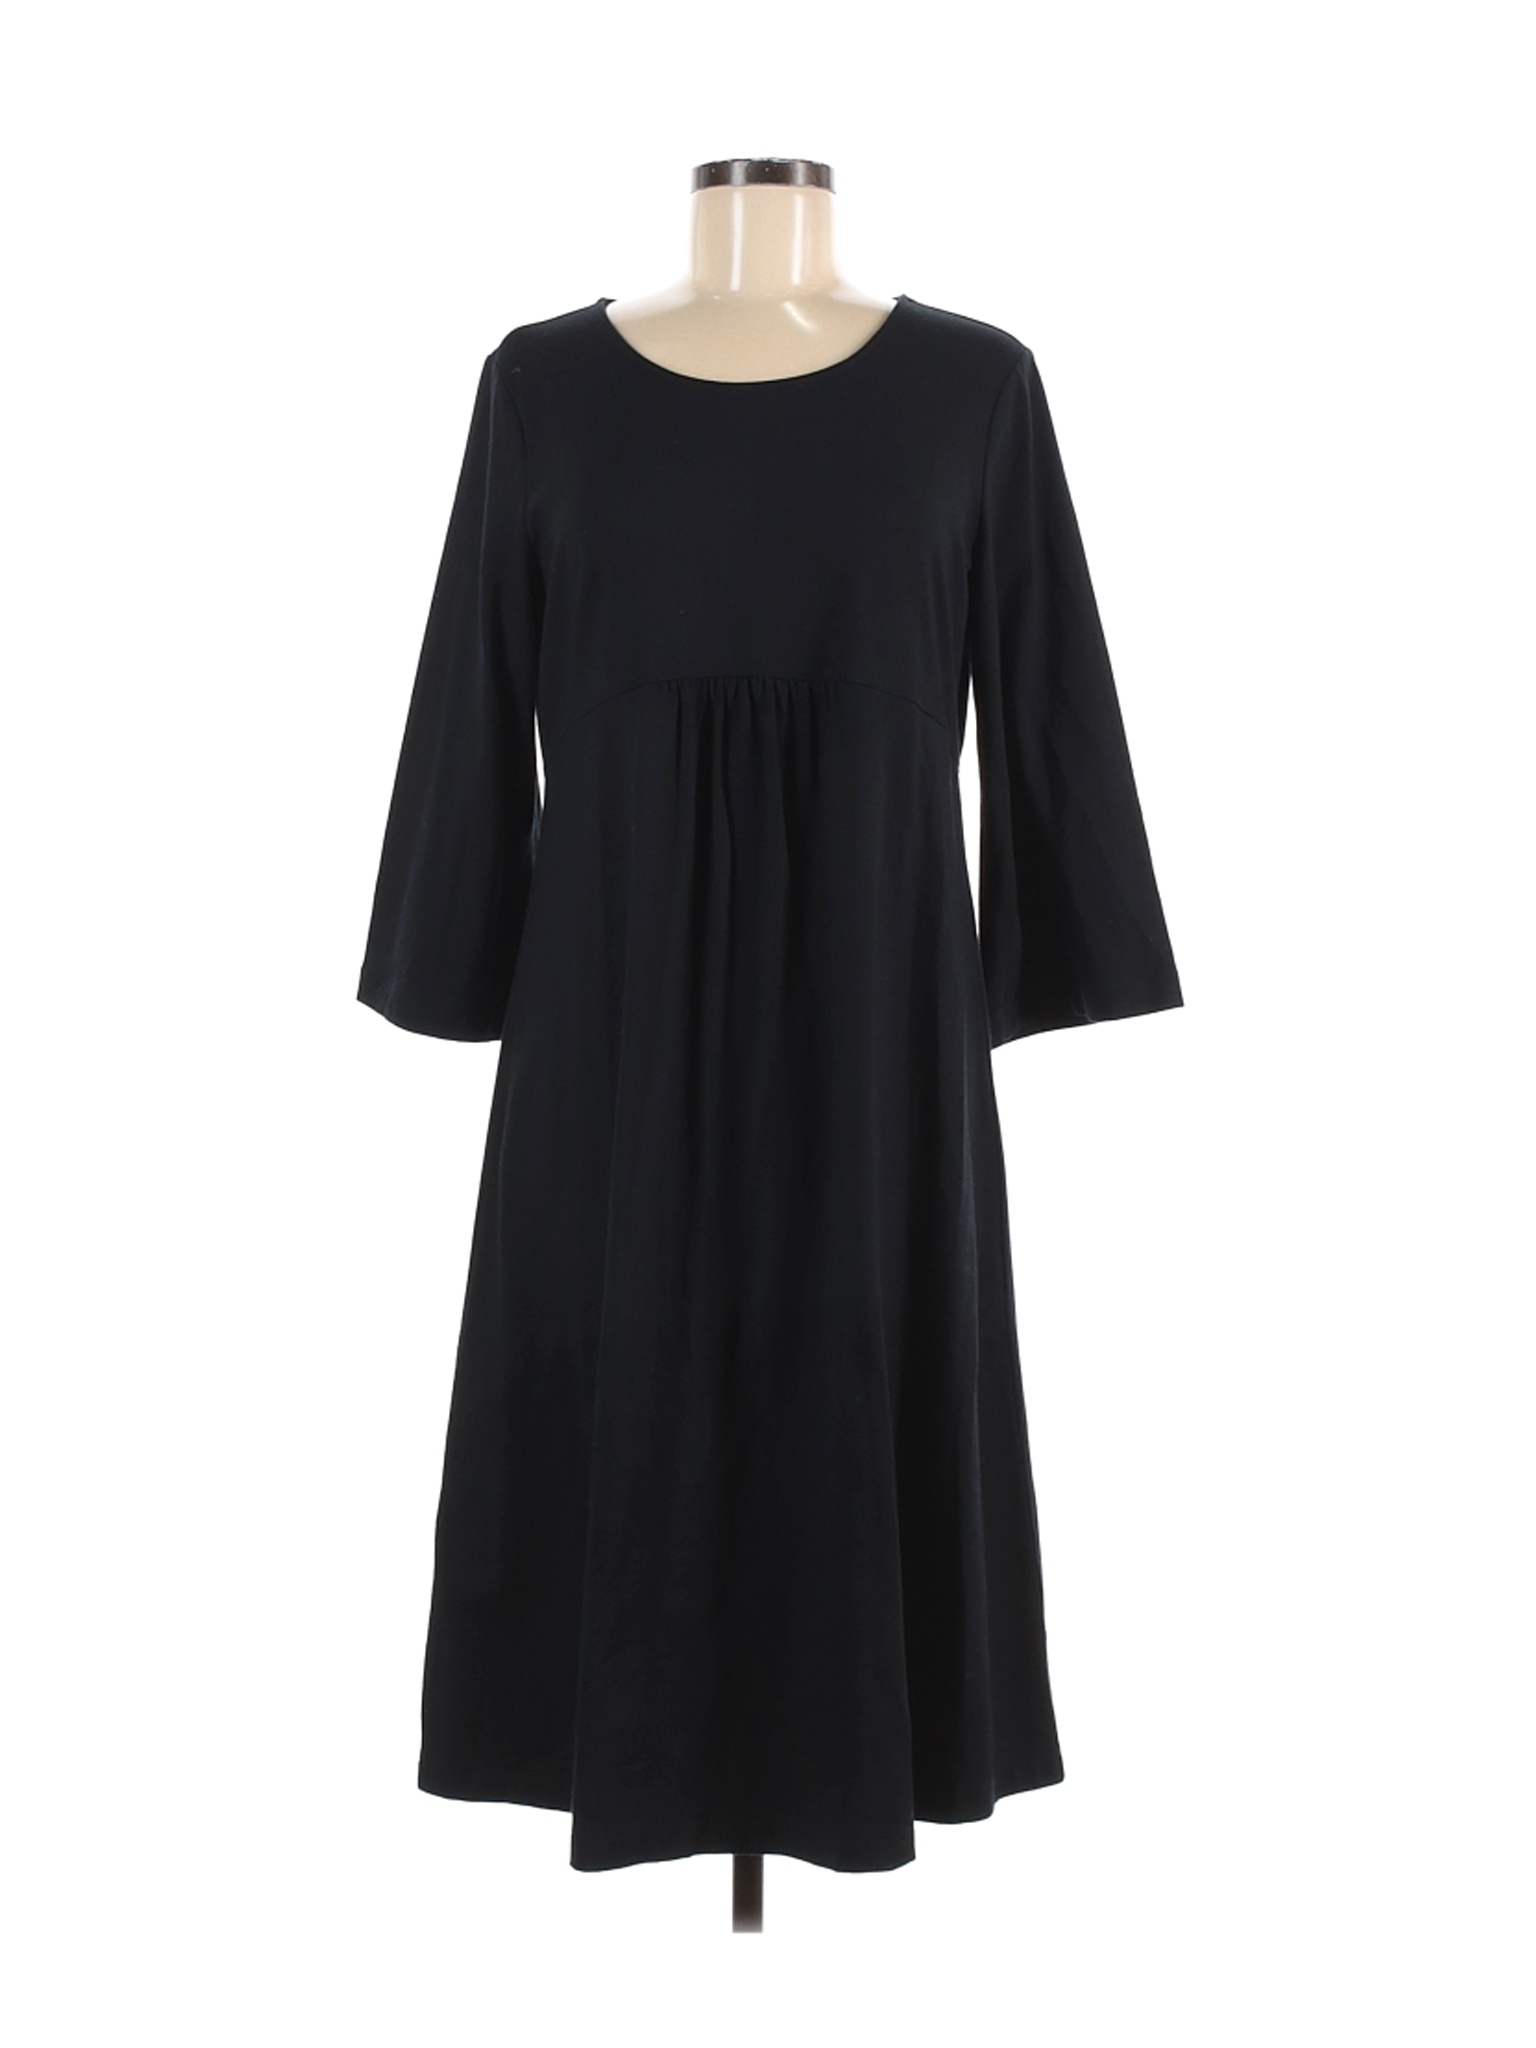 J.Jill Women Black Casual Dress M | eBay